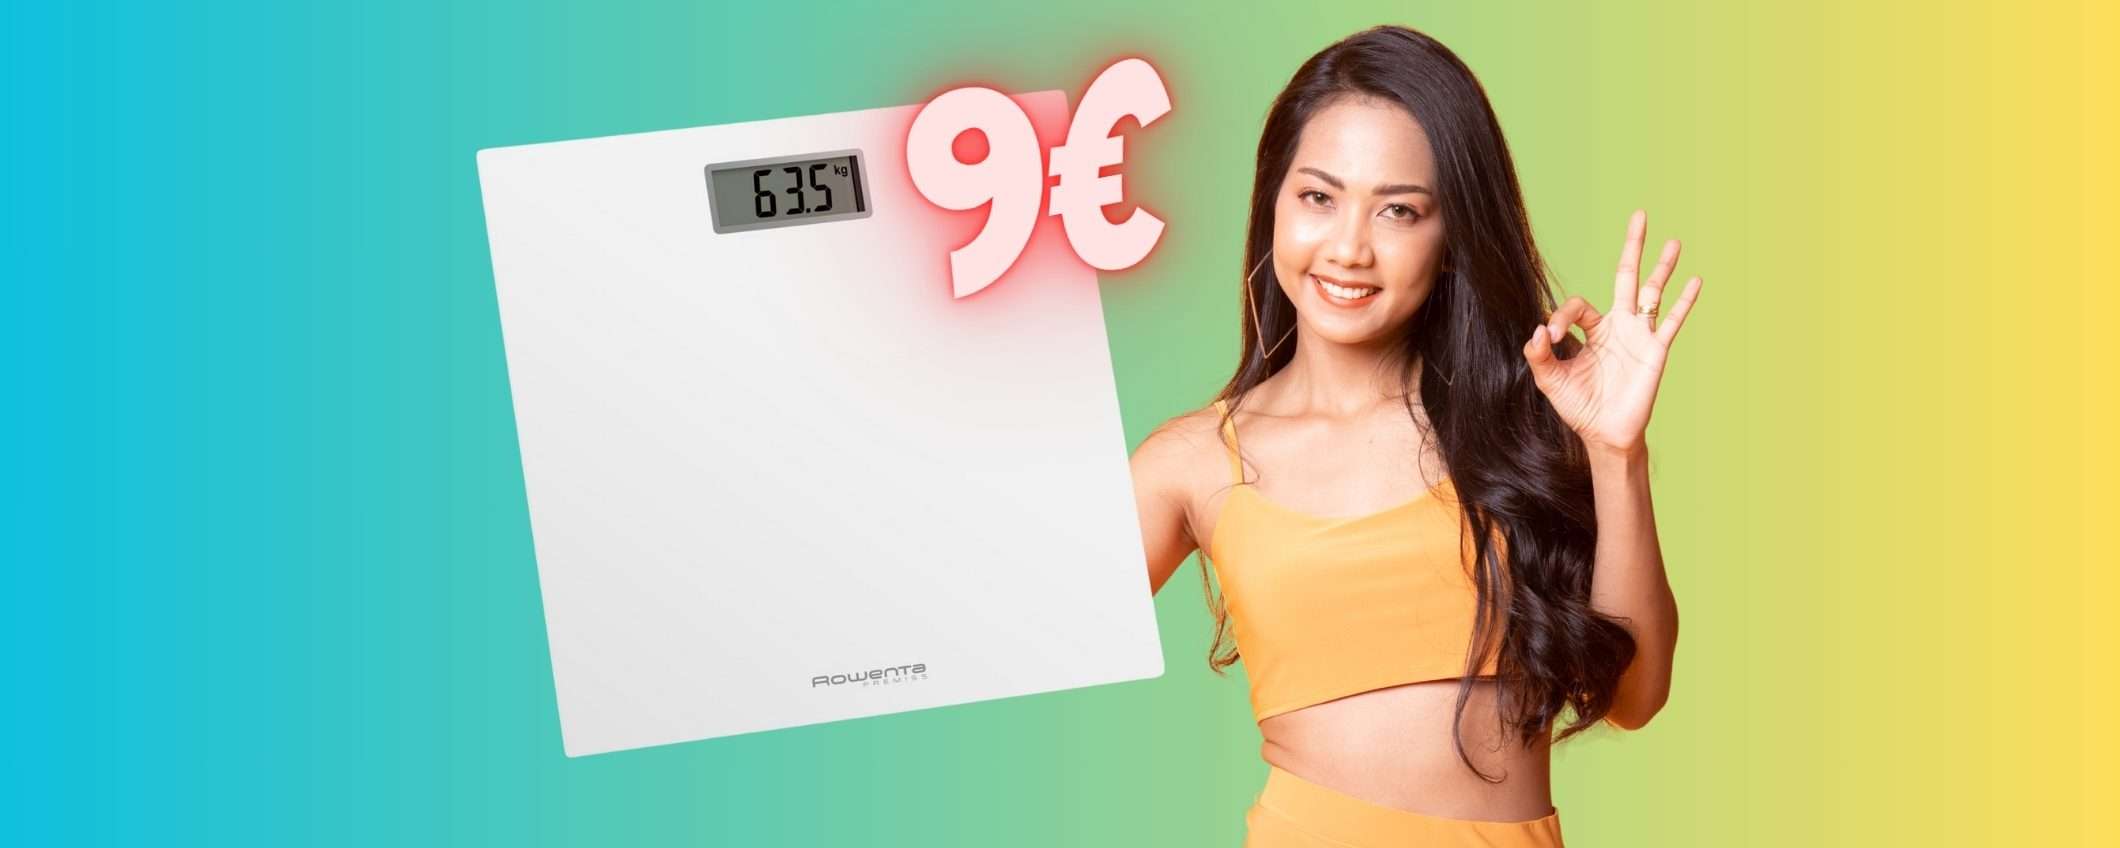 Bilancia pesapersone digitale by Rowenta tua con APPENA 9€